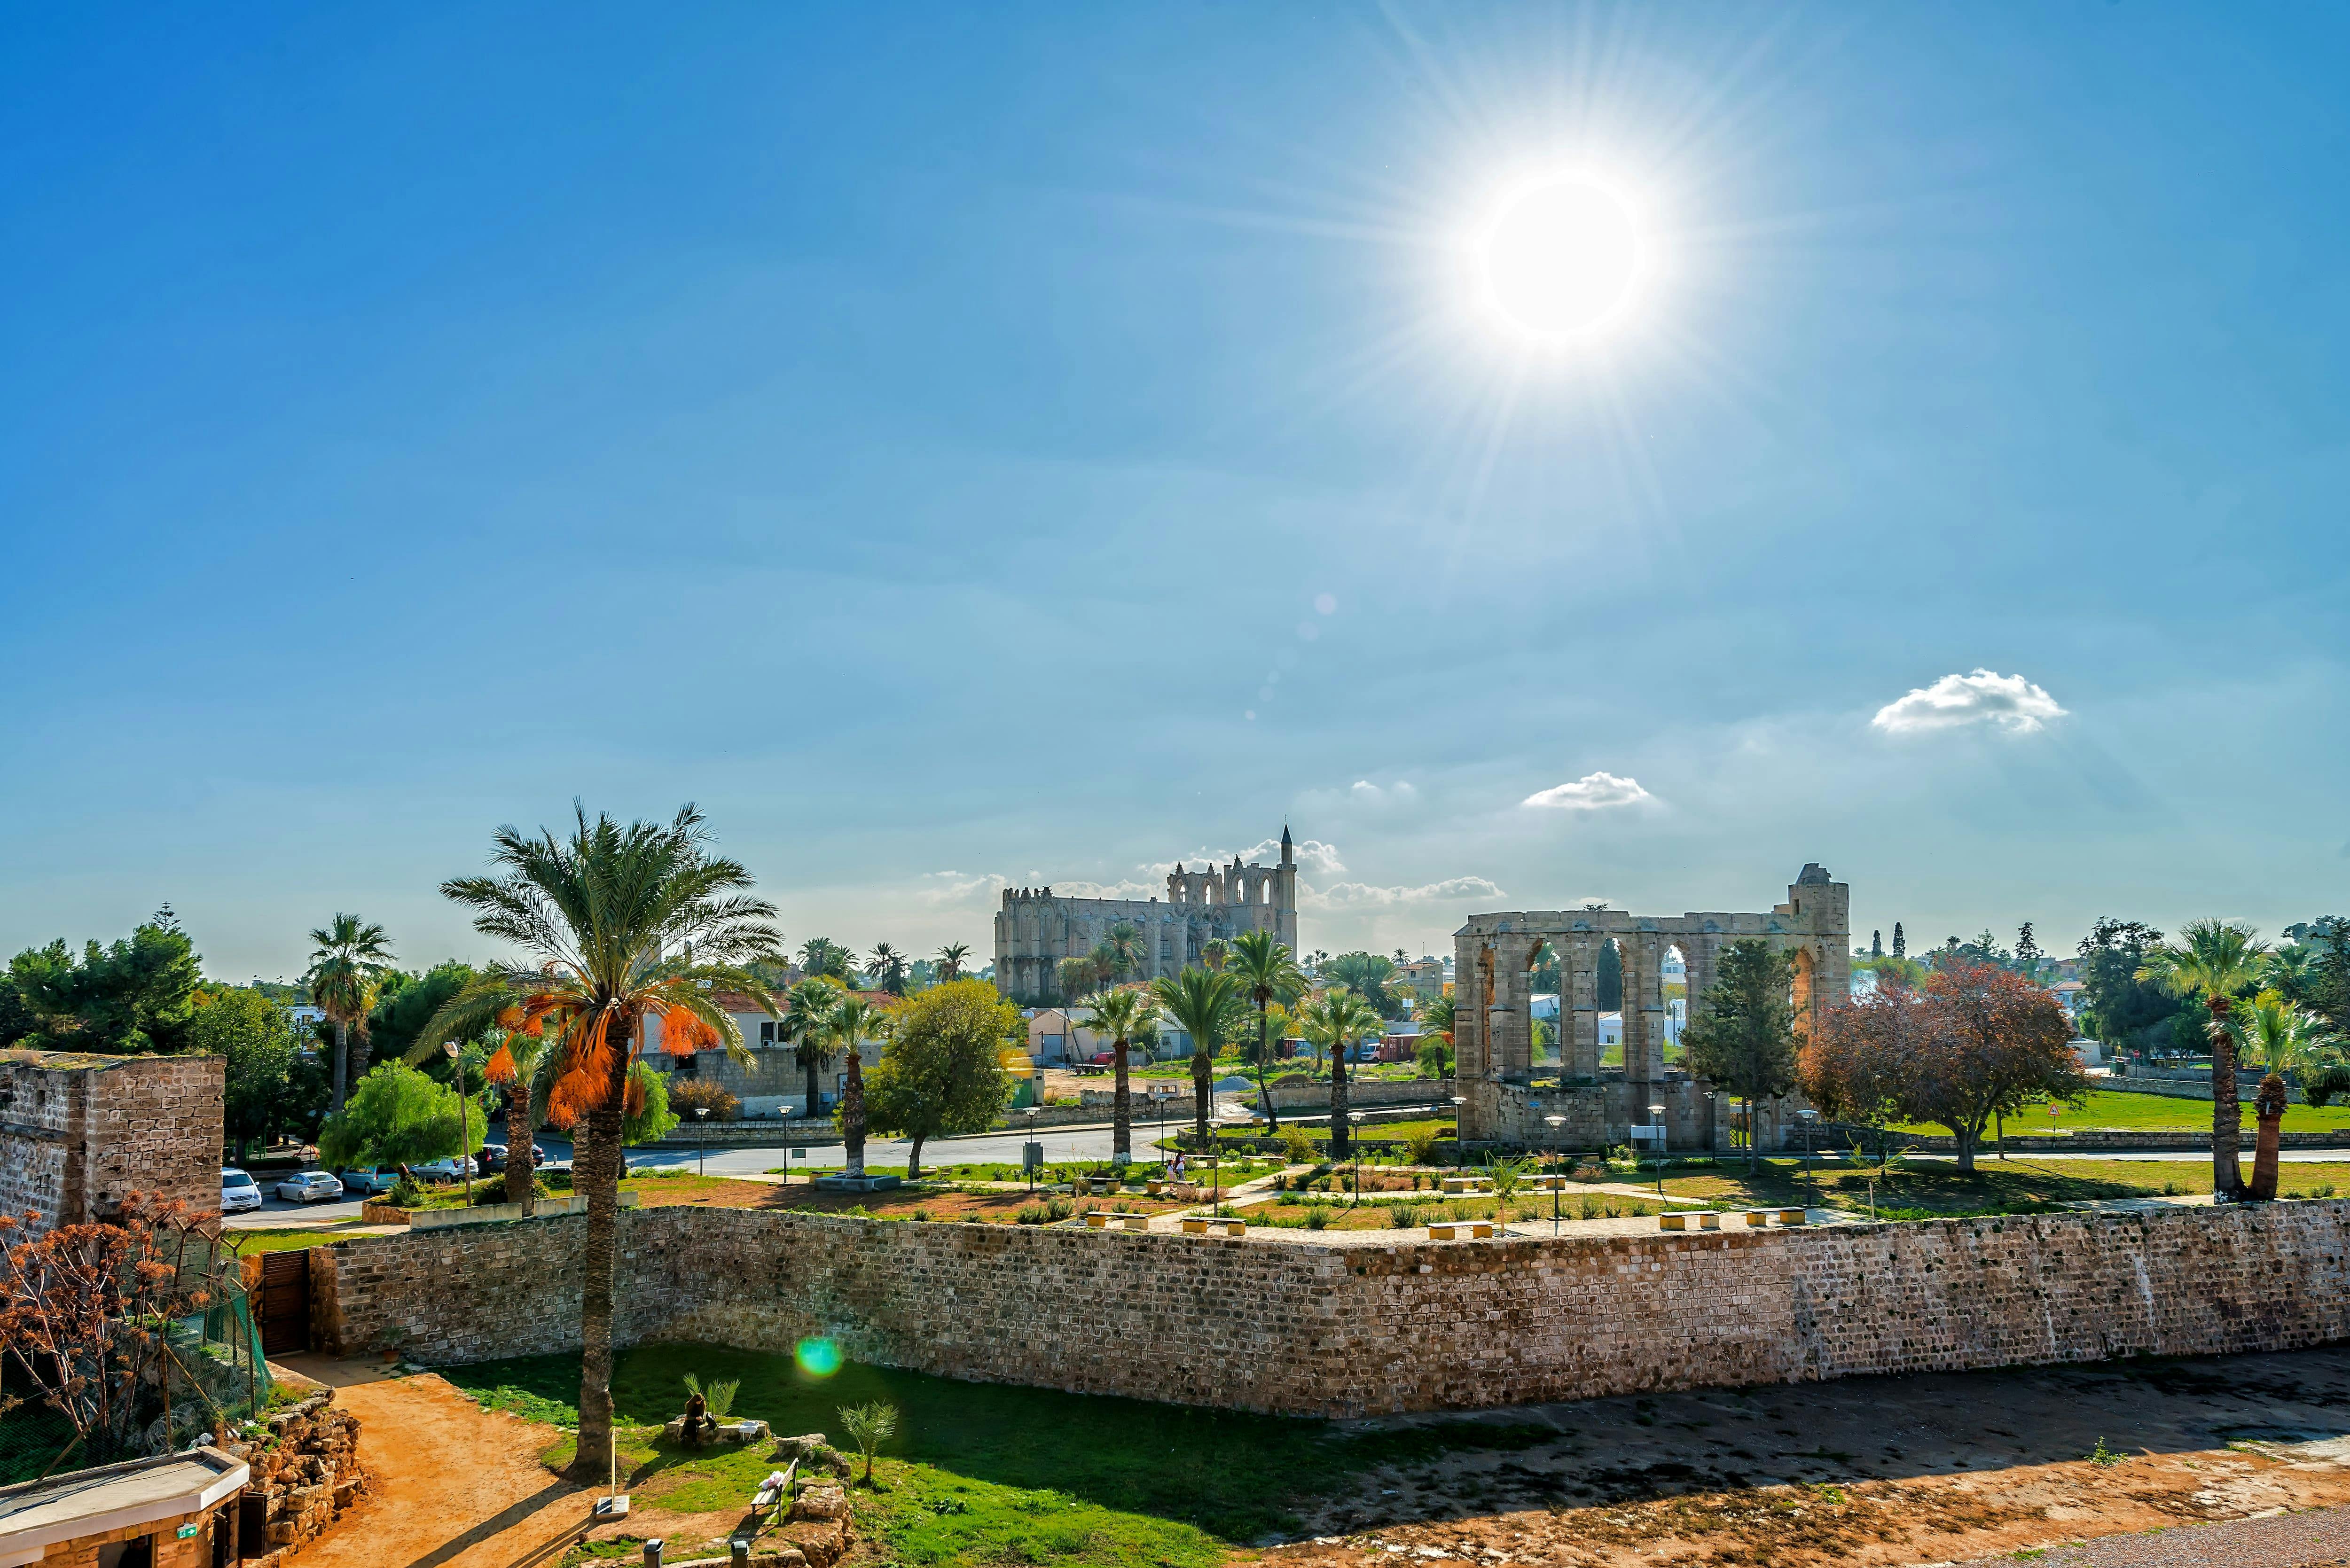 Byrundtur i Famagusta med Salamis og "spøkelsesbyen" Varosha